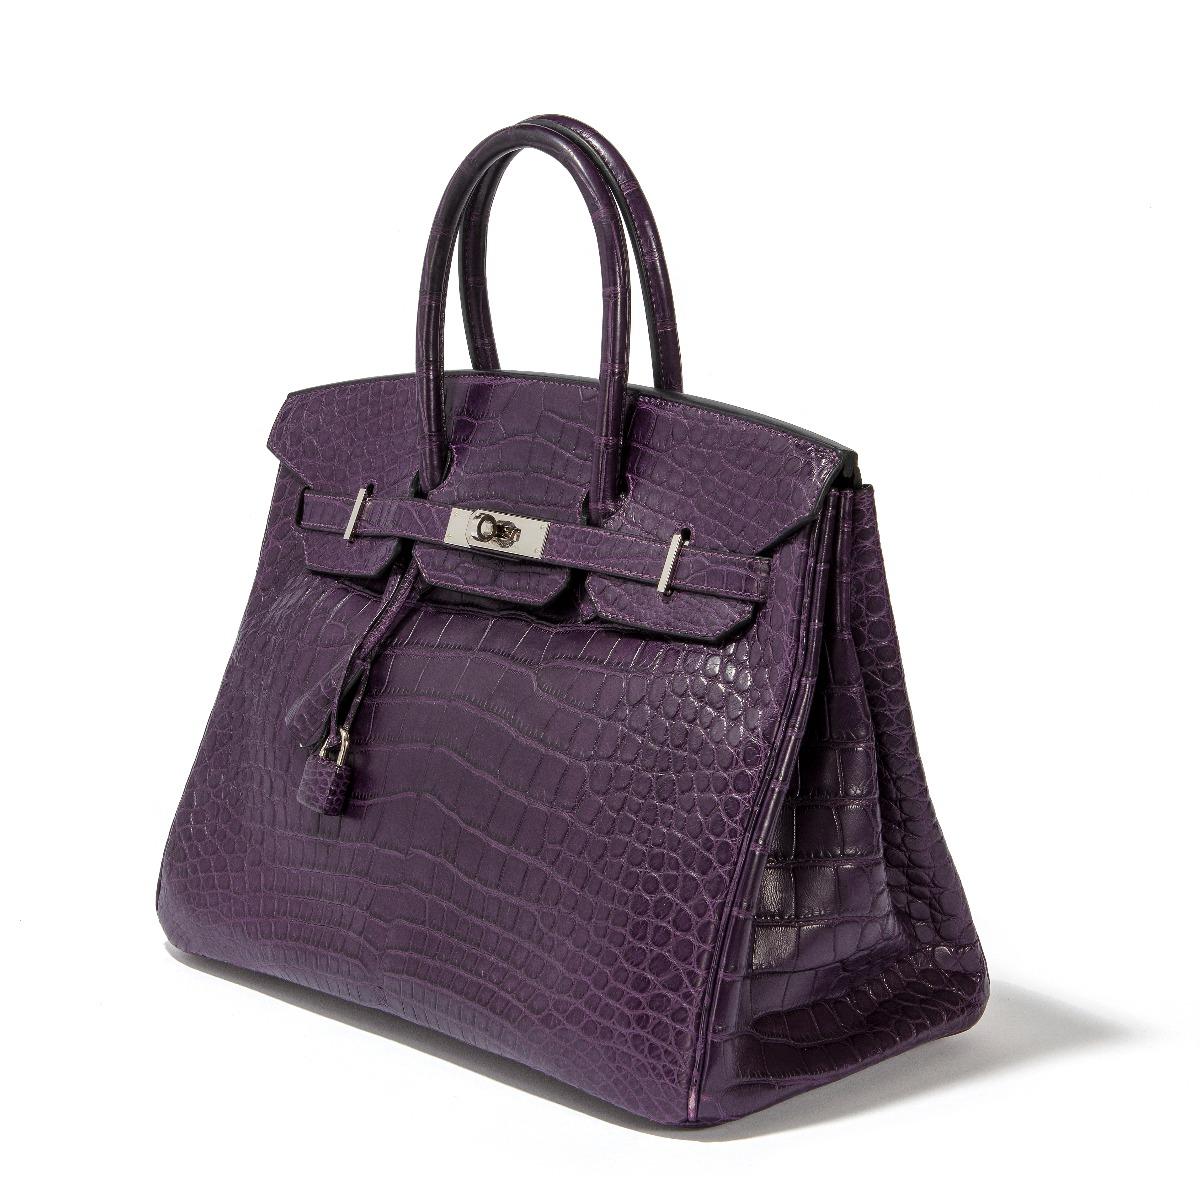 Hermès Birkin Bag Porosus 35 In Good Condition For Sale In London, GB